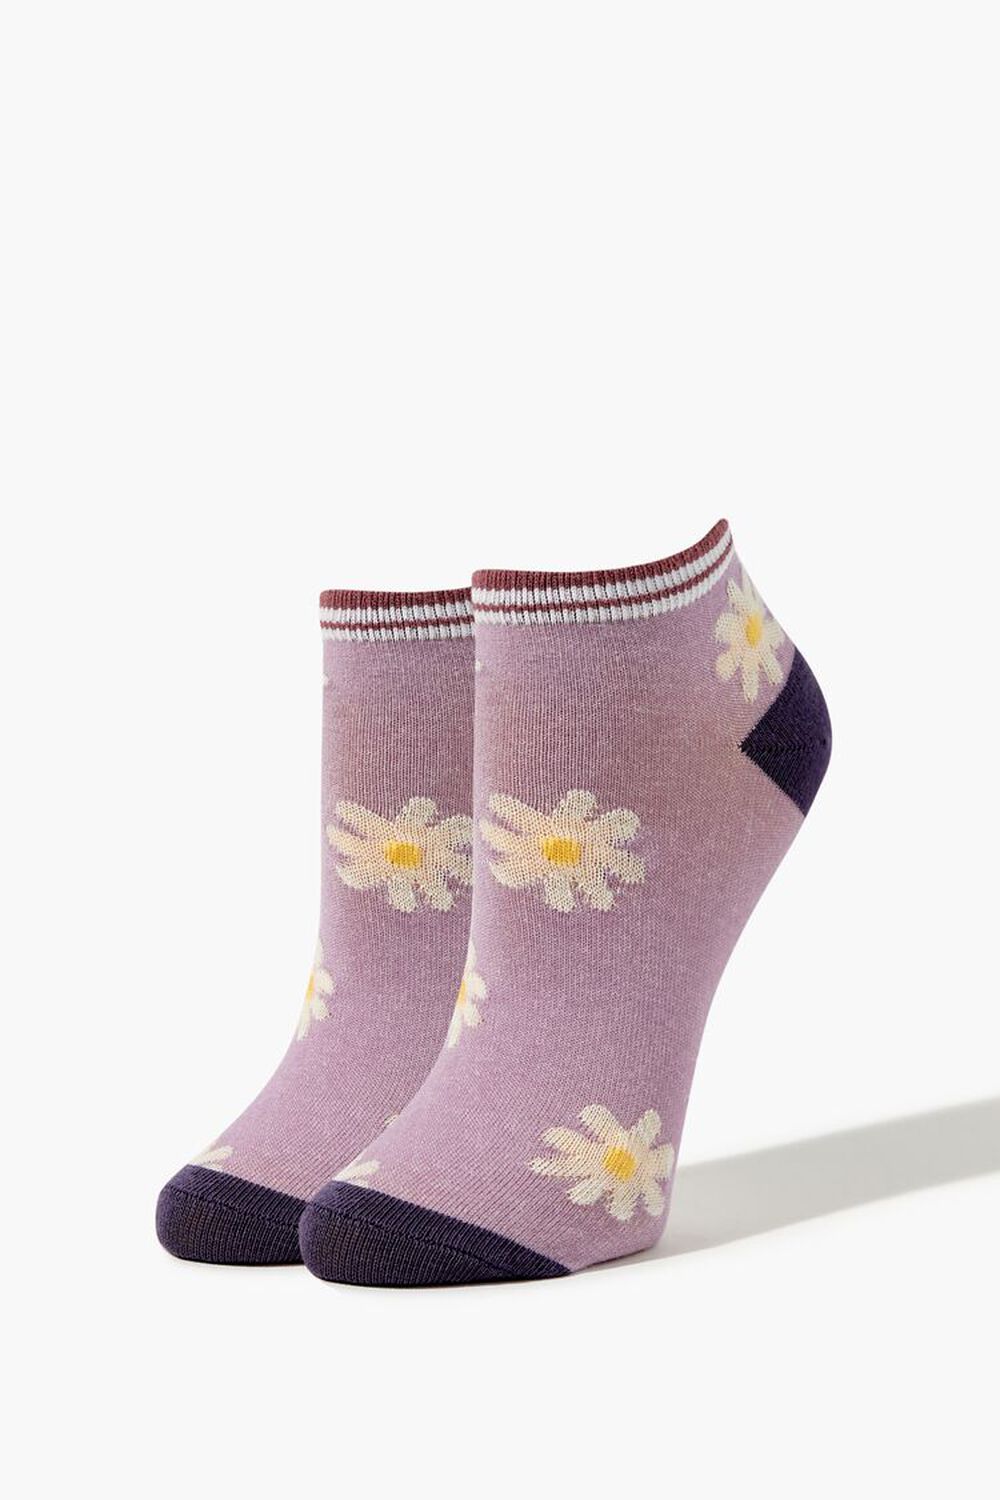 Striped Floral Print Ankle Socks, image 1